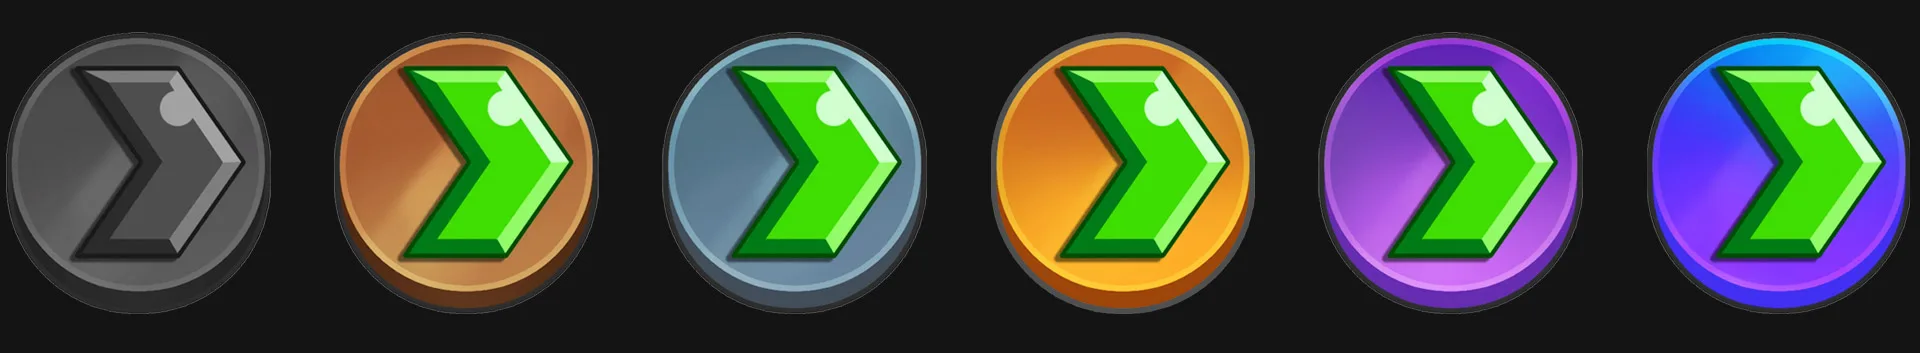 XD Badge Levels Arcade Online